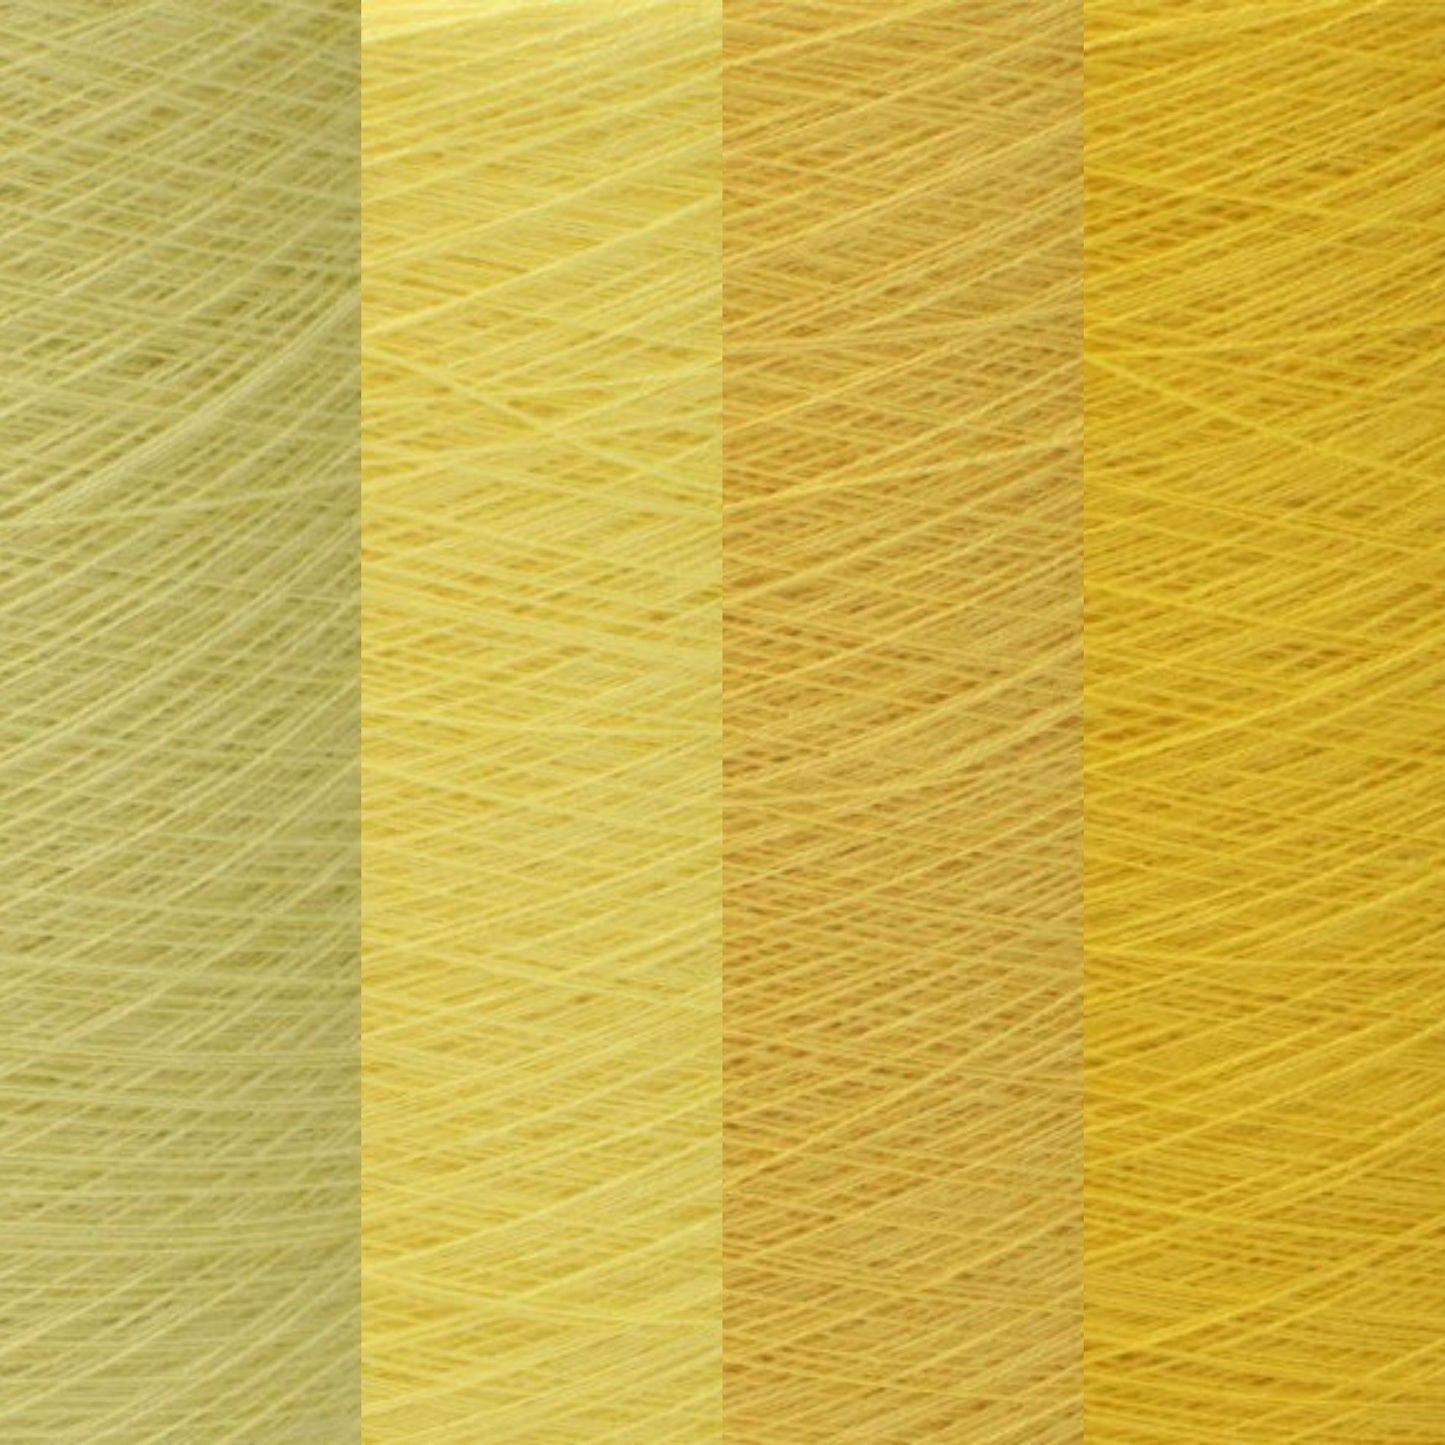 Gradient ombre yarn cake colour combination C329